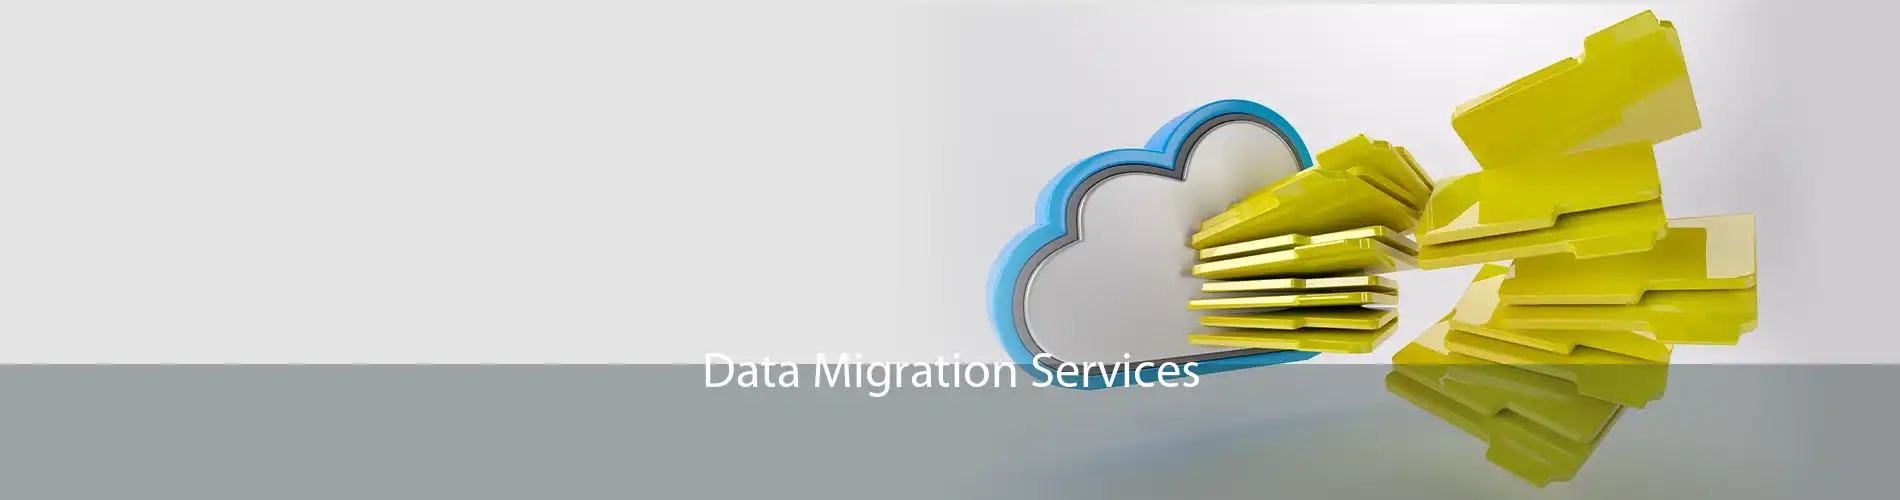 Data Migration Services 